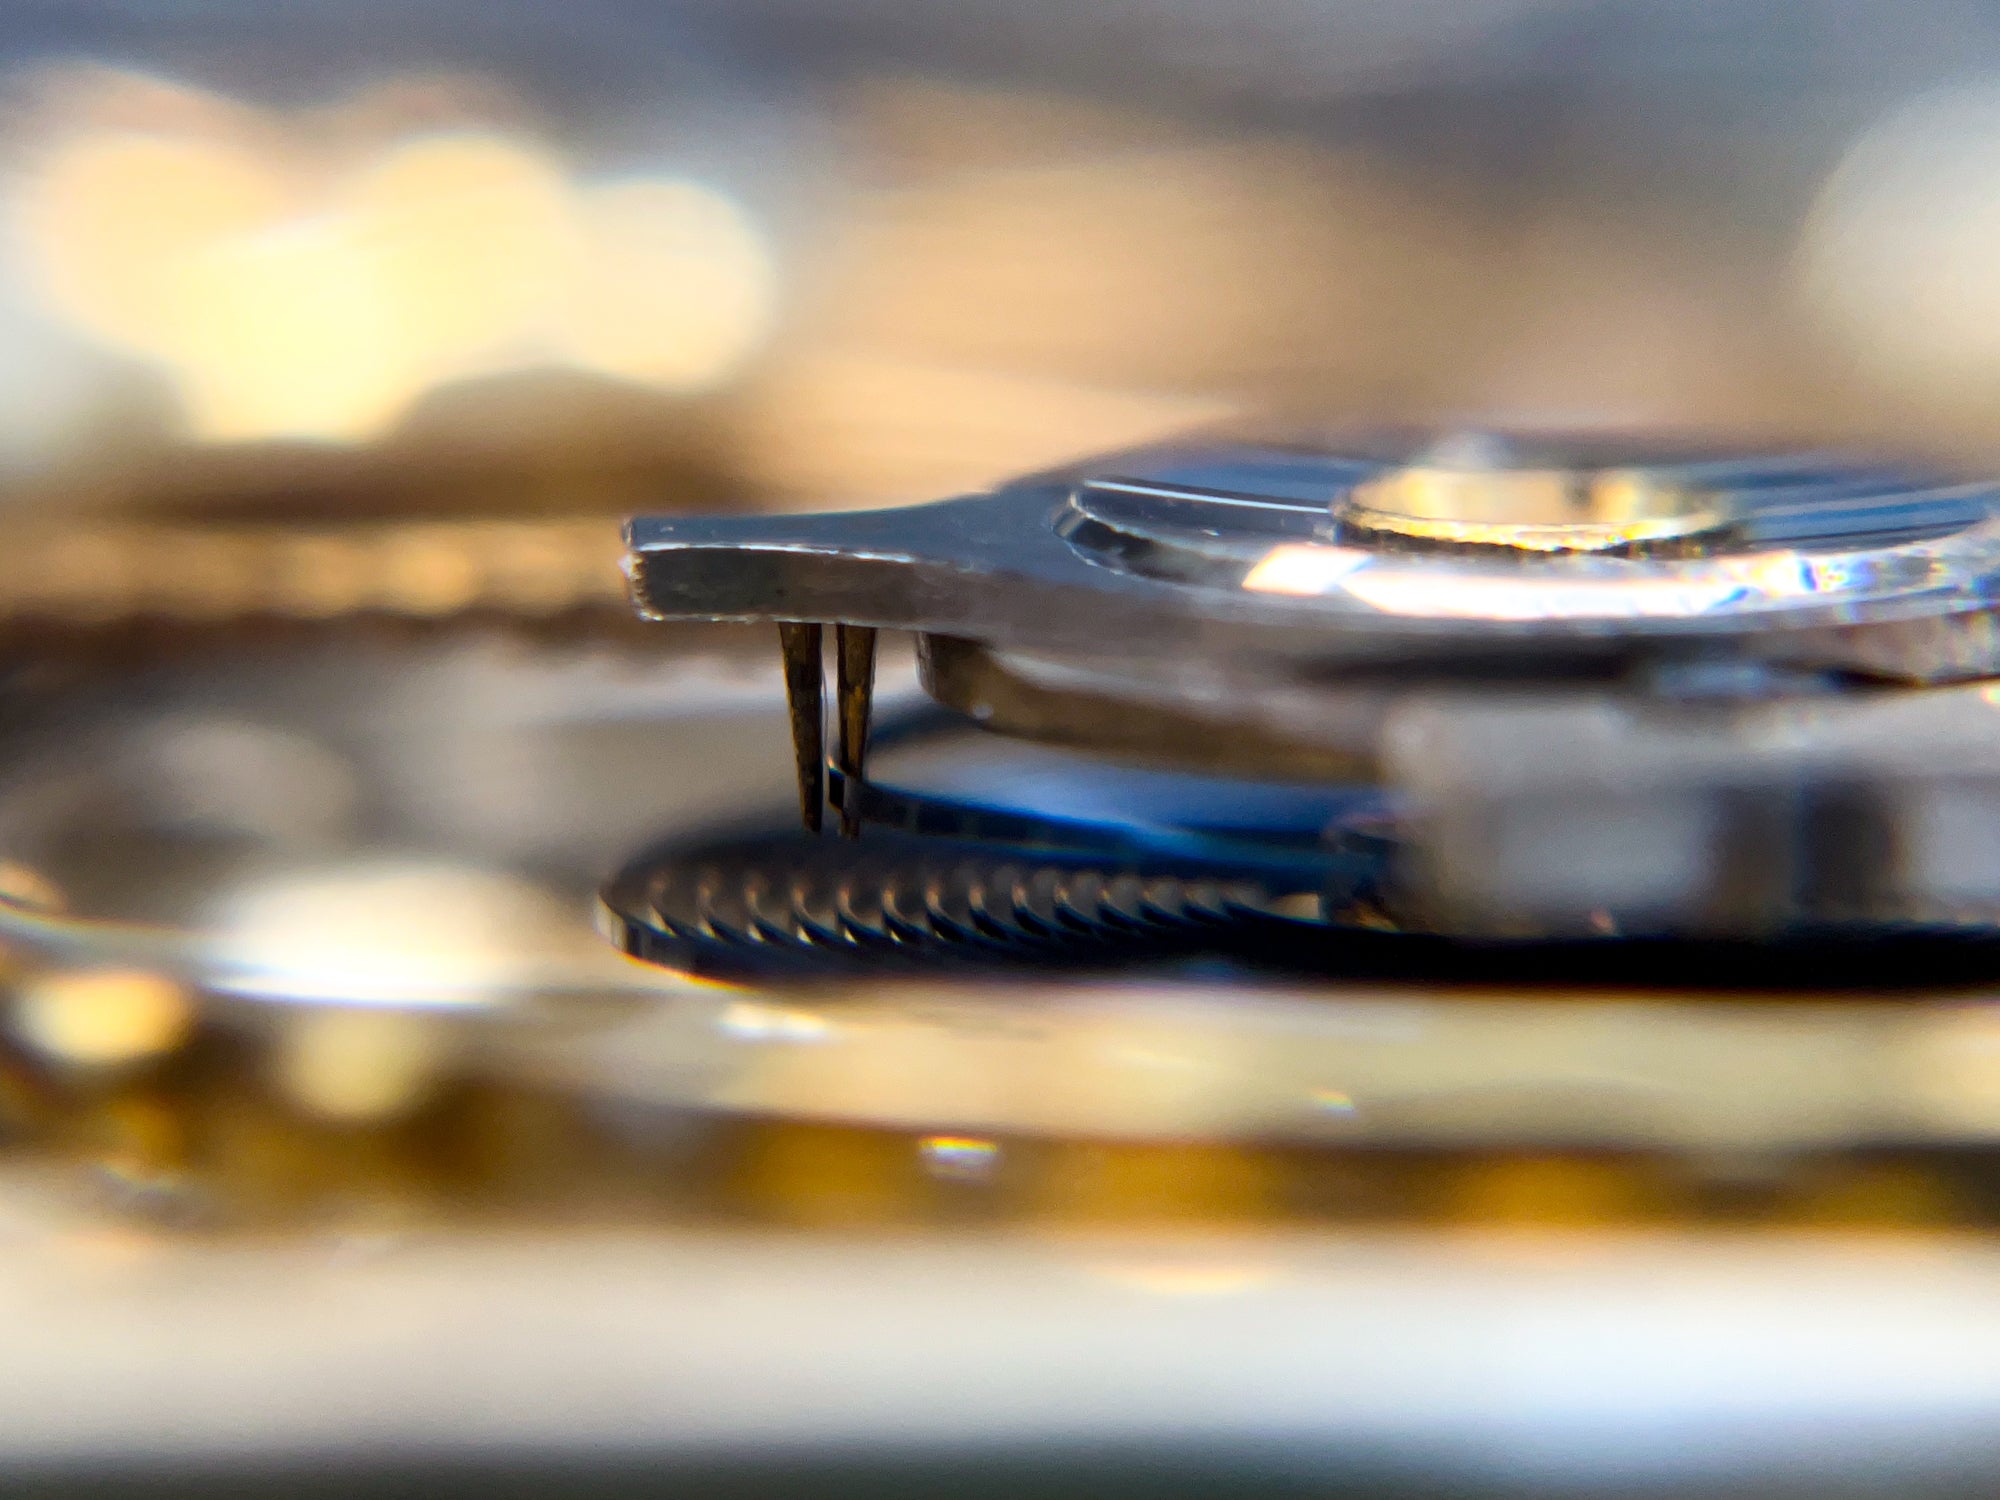 Hairspring through regulating pins in a vintage pocket watch